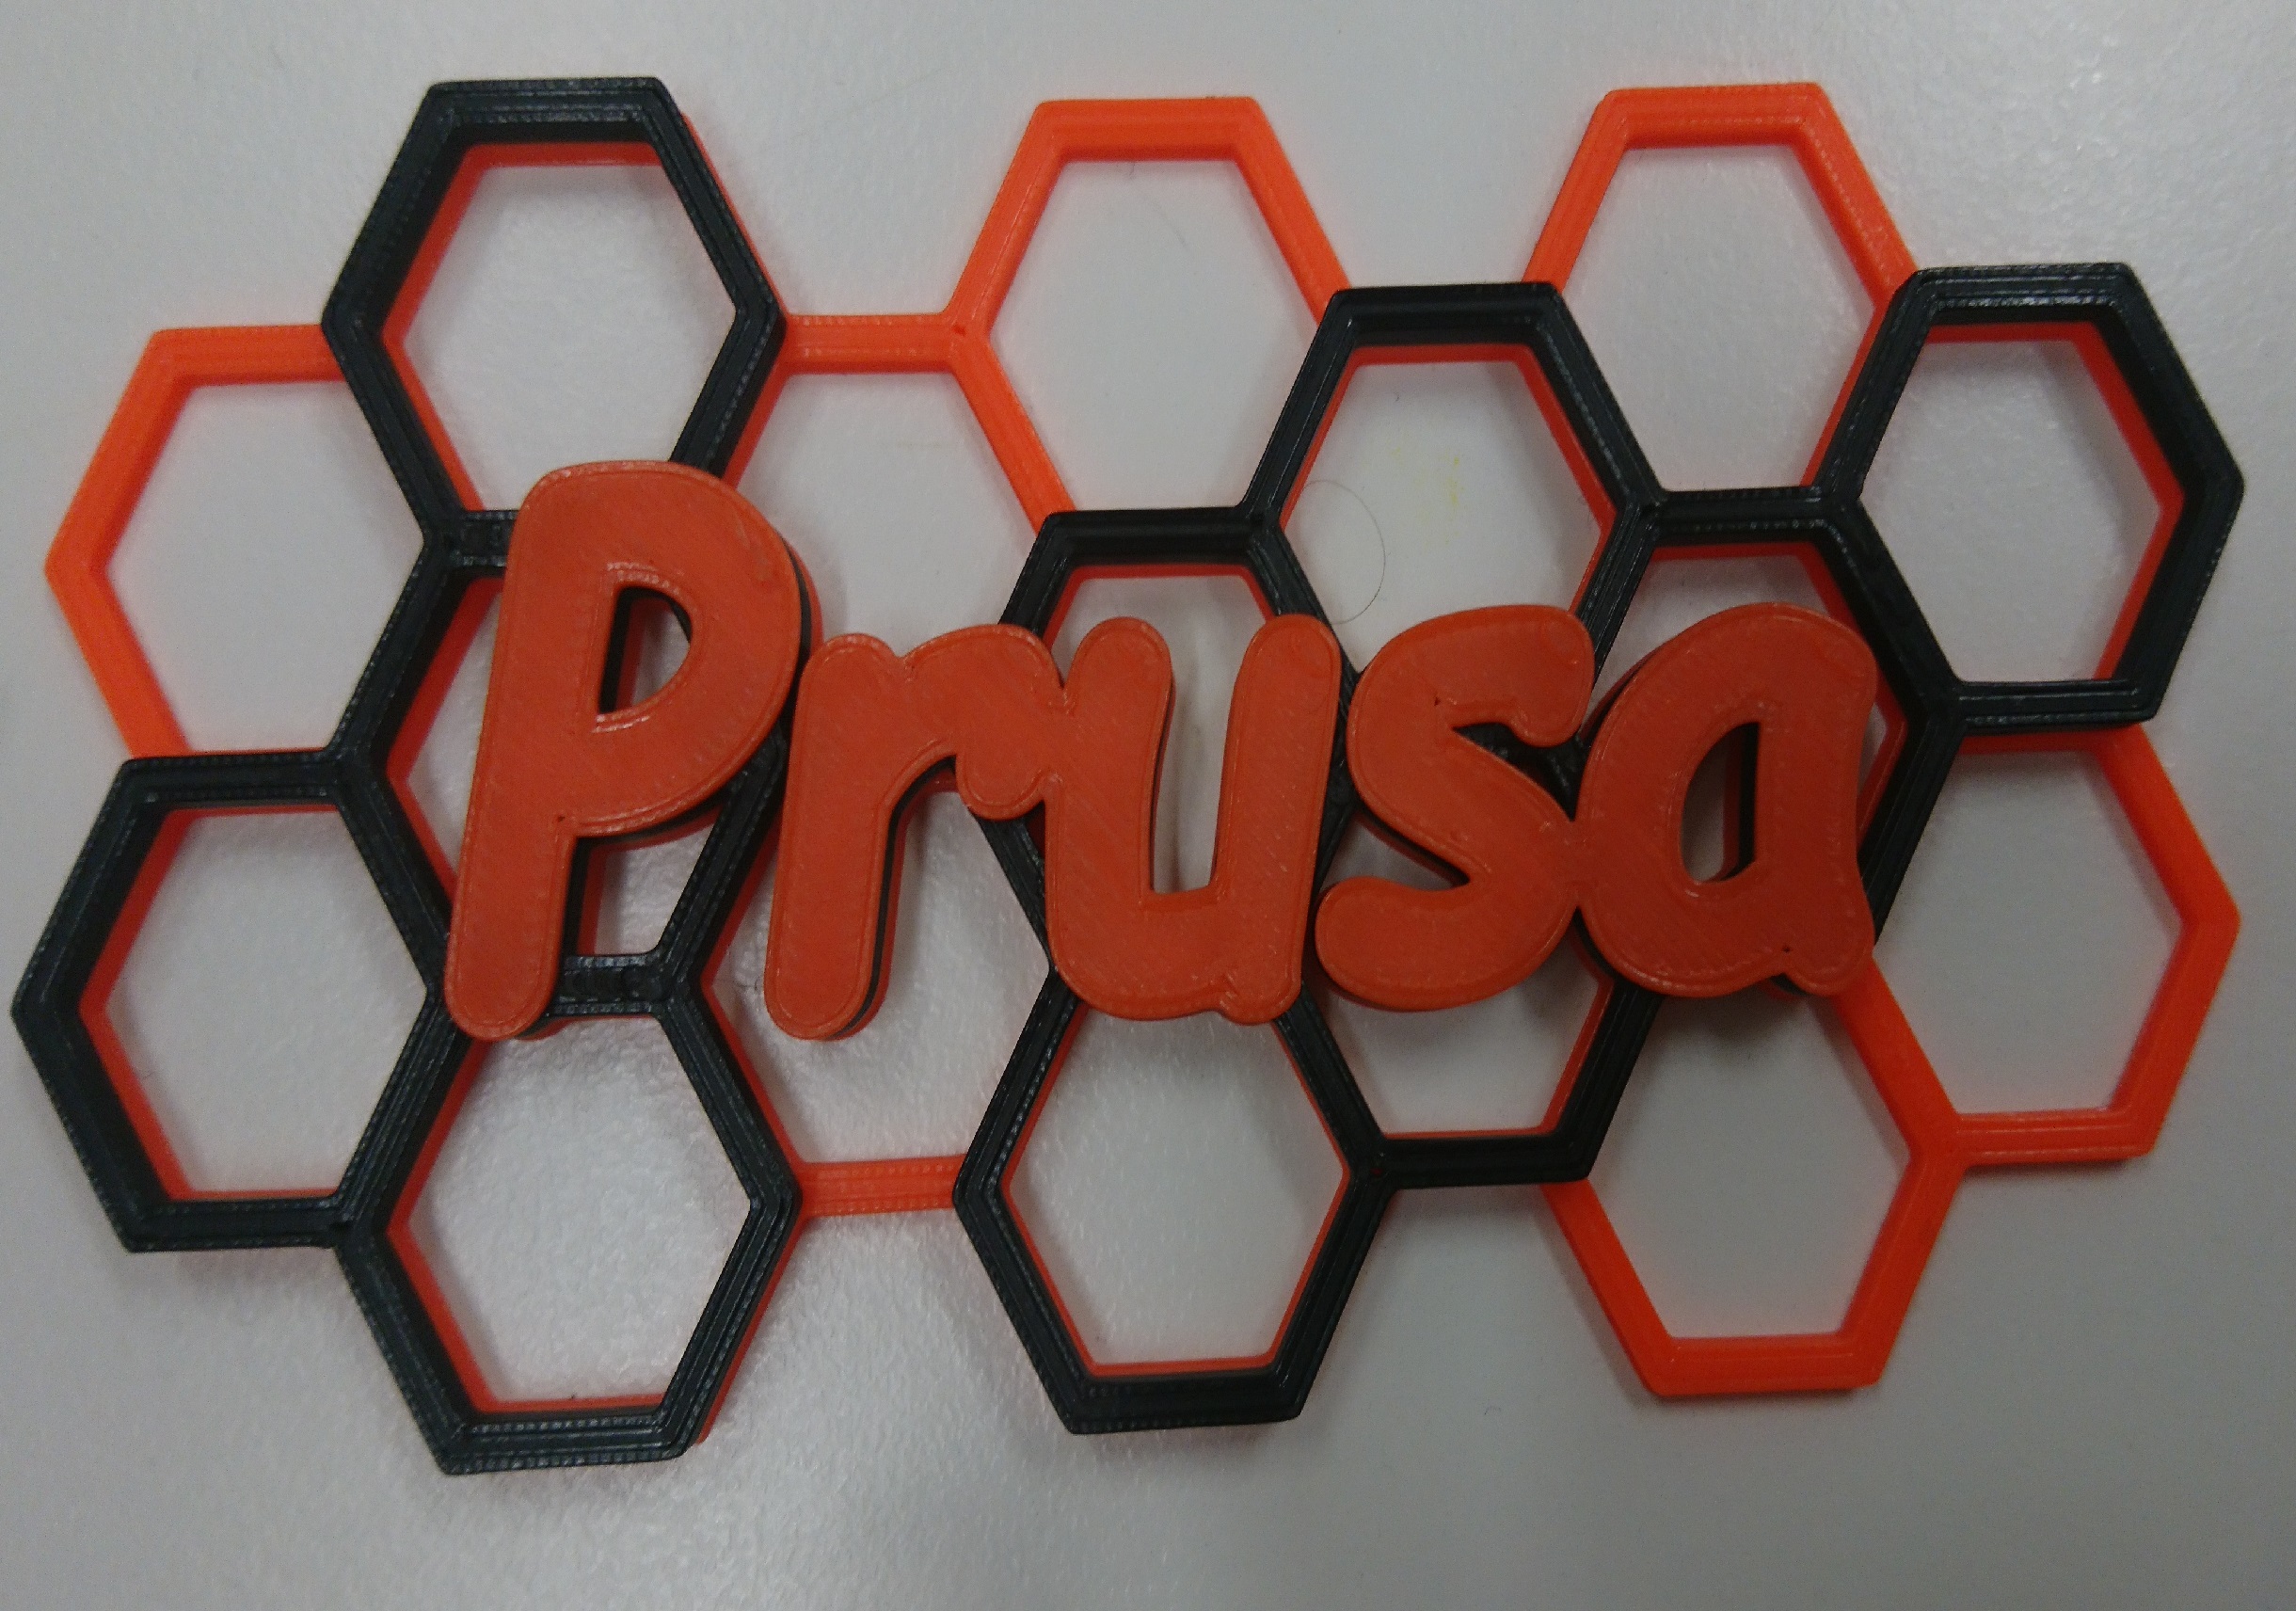 Prusa label